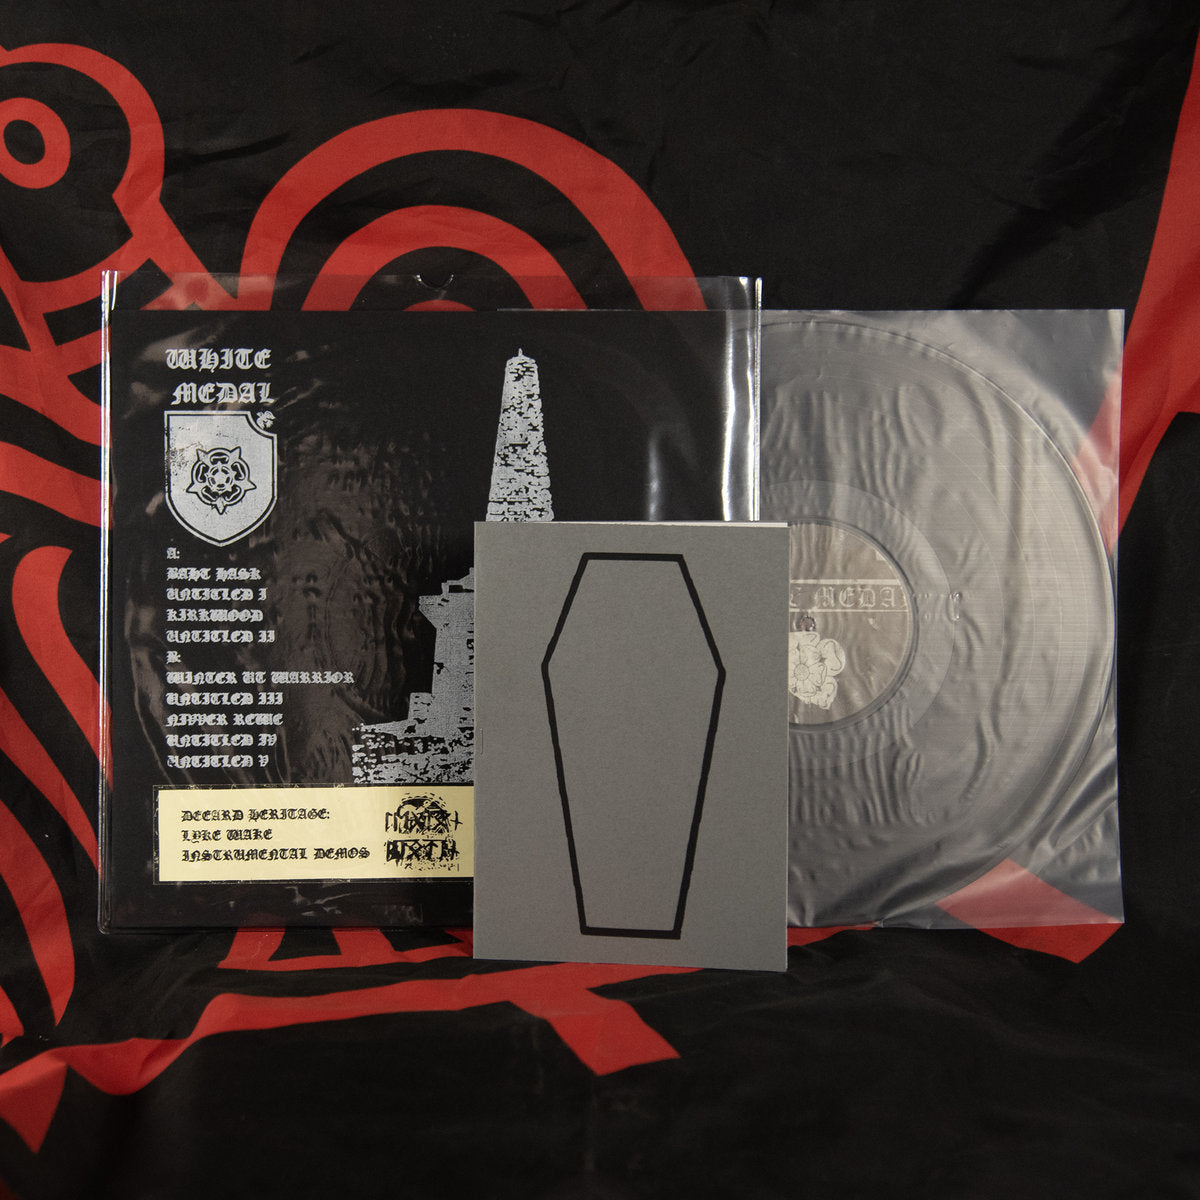 White Medal - “Deeard Heritage: Lyke Wake Instrumental Demos” LP + Zine